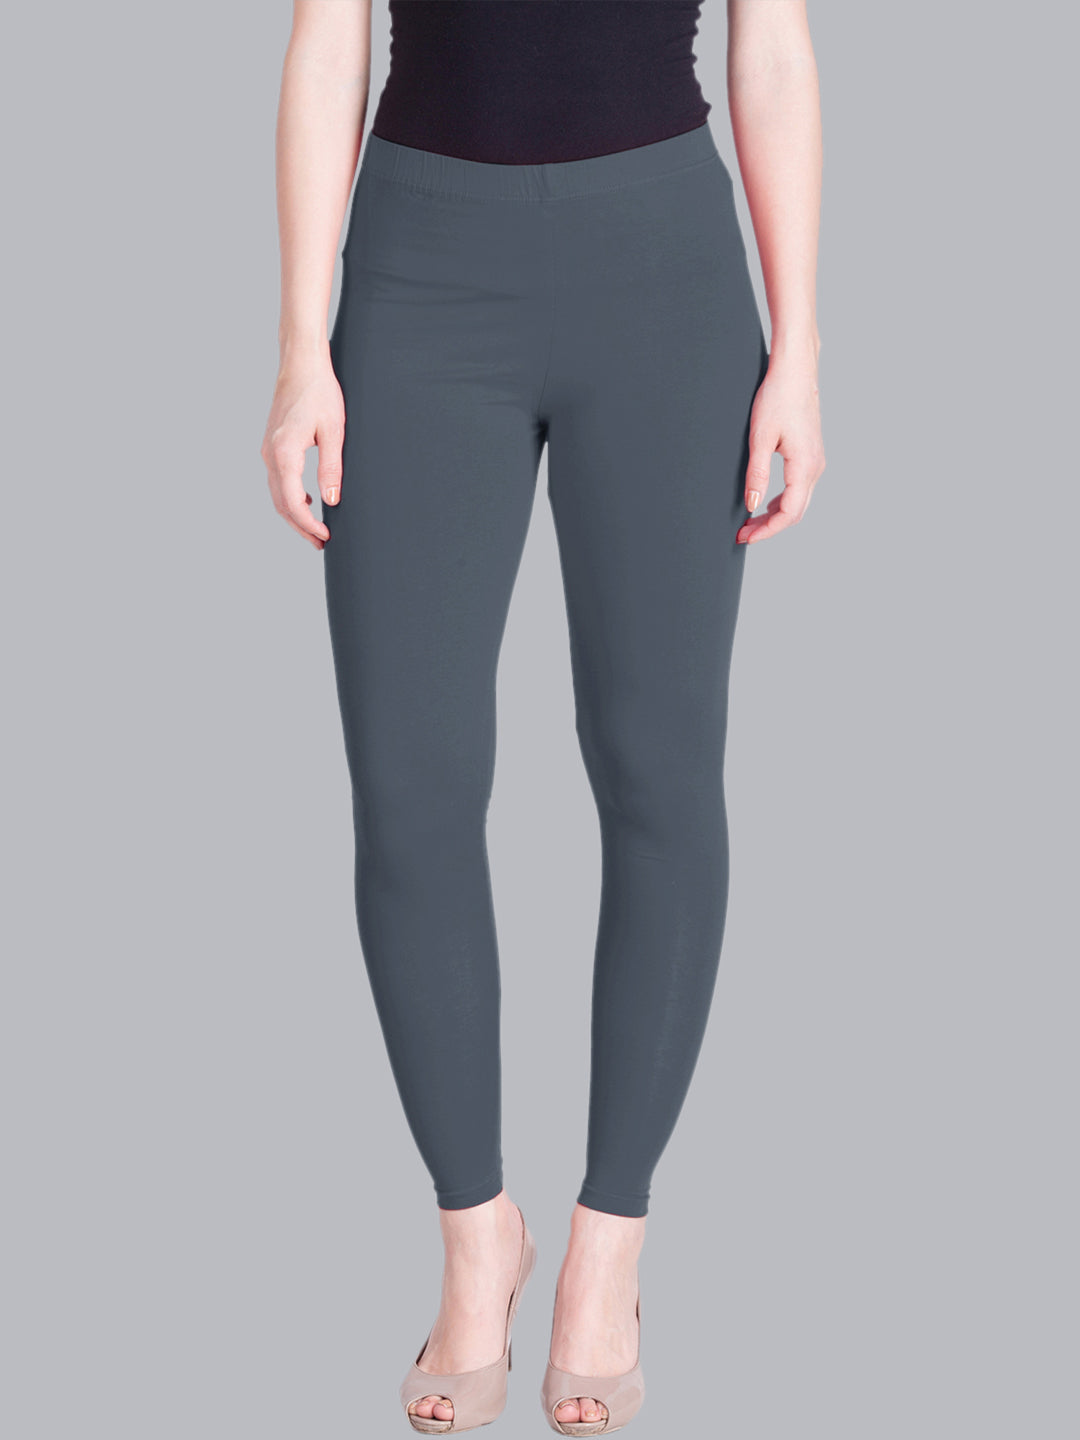 Buy Lux Lyra Women's Regular Fit Cotton Blend Leggings (Ankle-Length-Legging_Steel  Grey_36) at